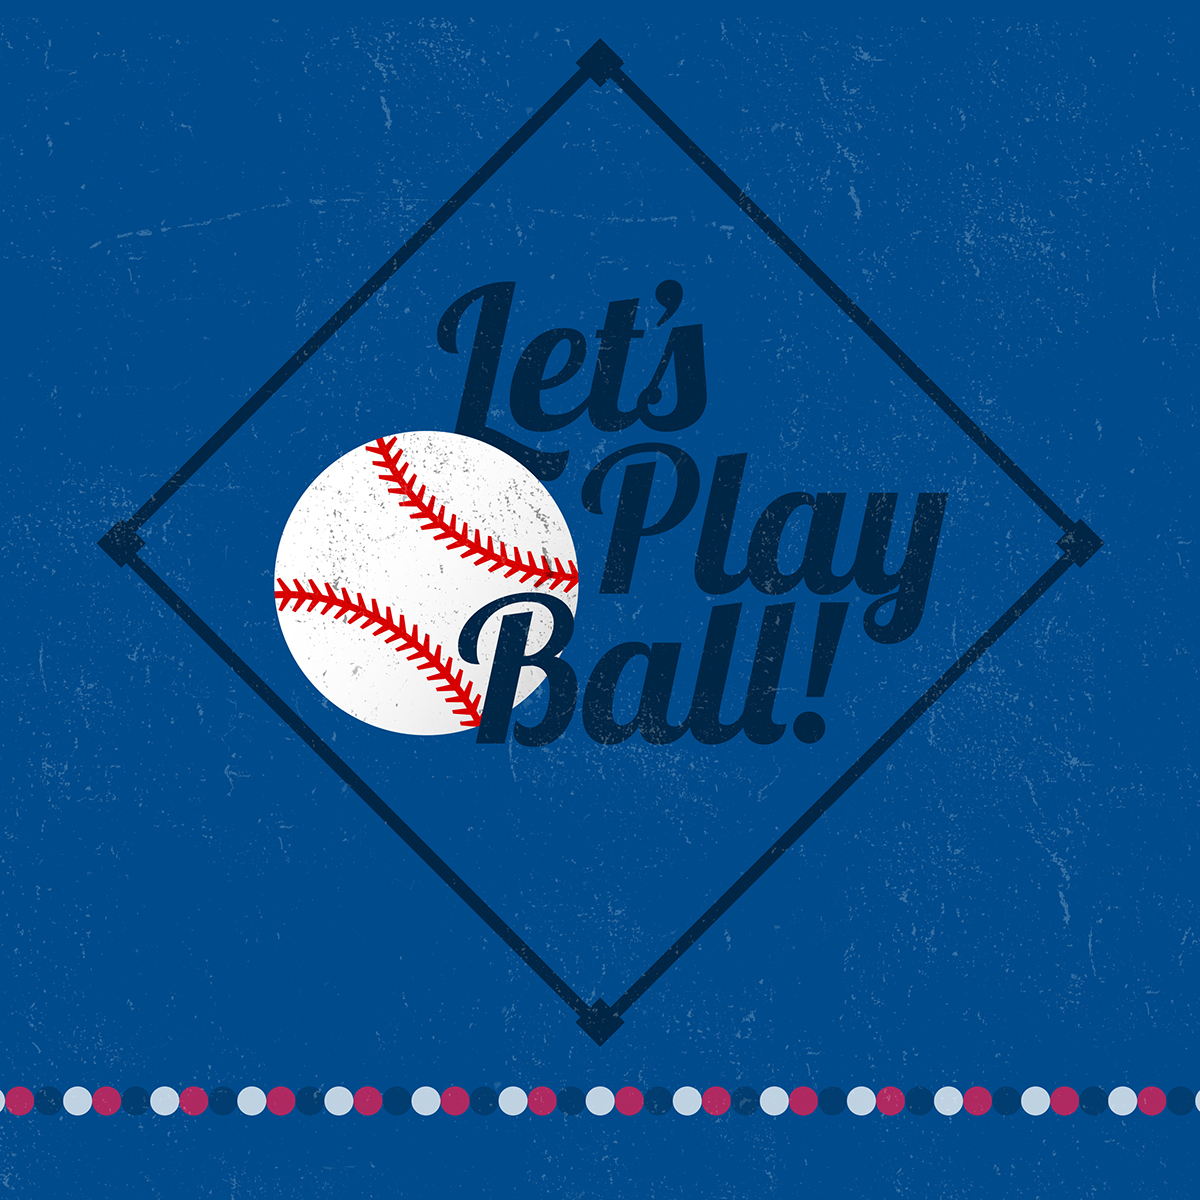 baseball Major League Major league baseball mlb Opening Day opening day 2015 opening night opening night 2015 lets play ball Fixtures design graphics art sport usa